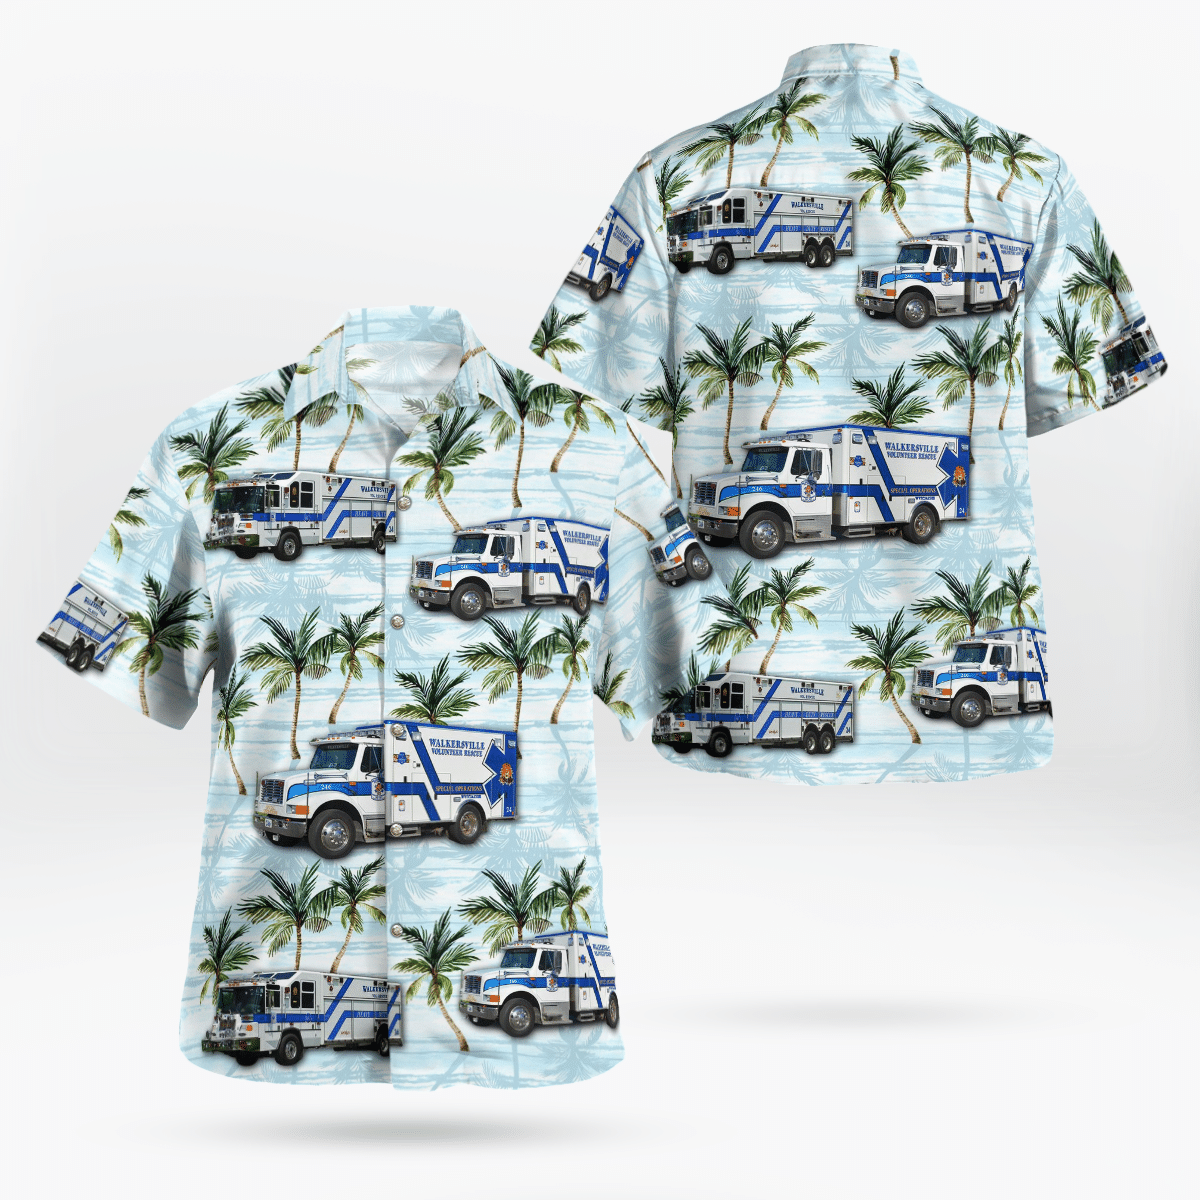 Listed below are some High-quality Aloha Shirt 201